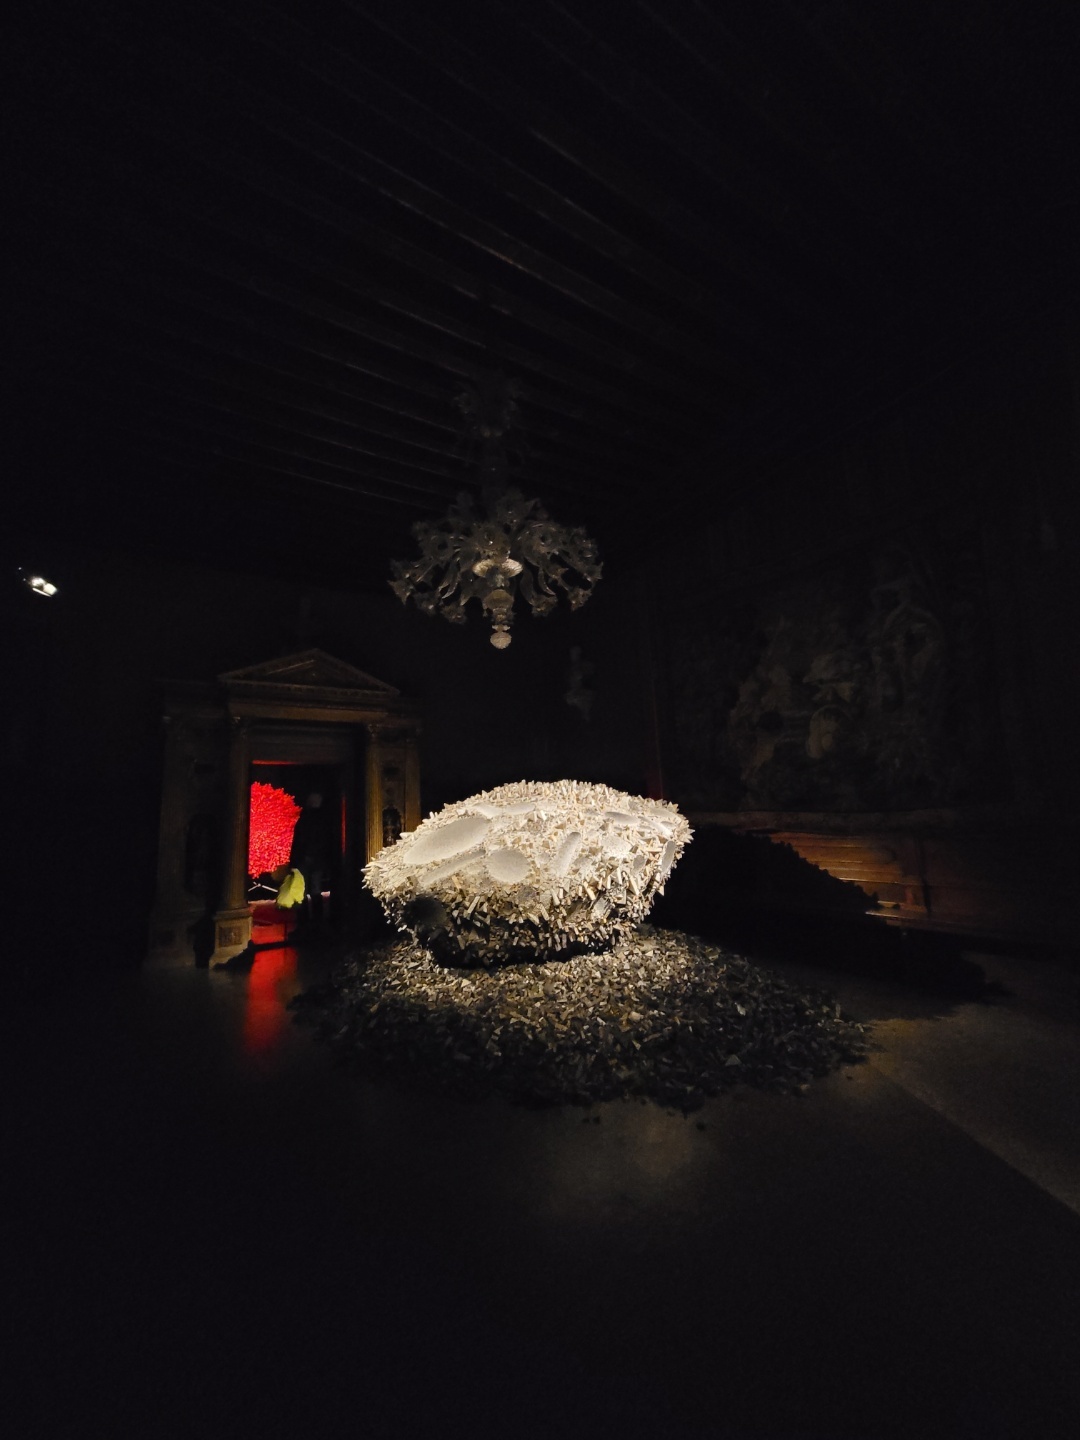 Installation view of “Chun Kwang Young: Times Reimagined” at Palazzo Contarini Polignac in Venice, Italy (Park Yuna/The Korea Herald)